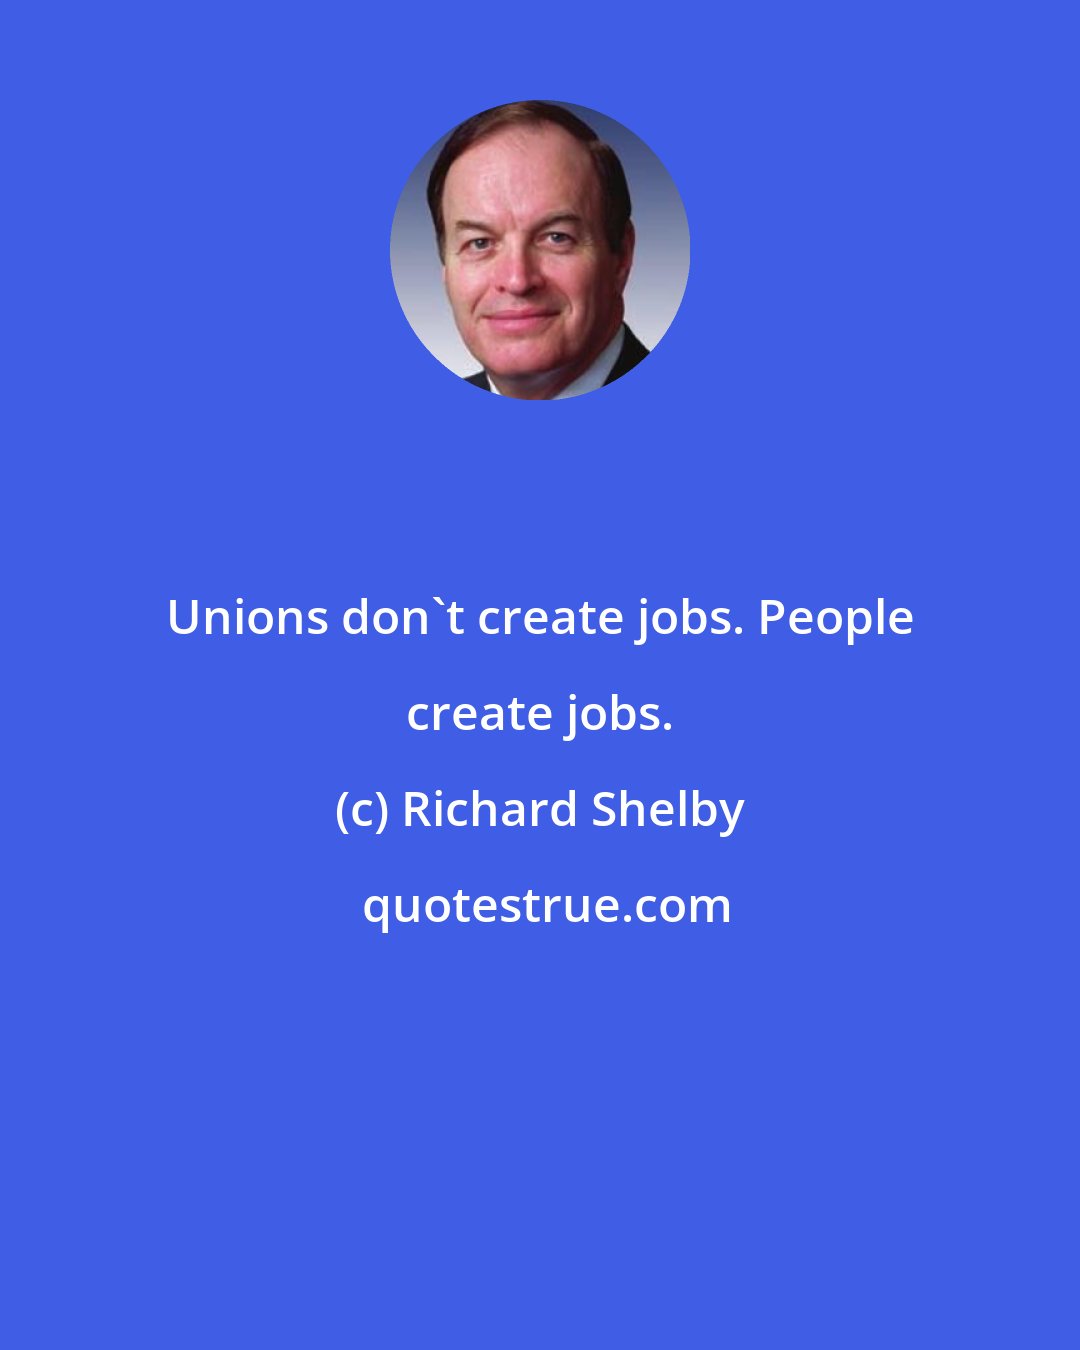 Richard Shelby: Unions don't create jobs. People create jobs.